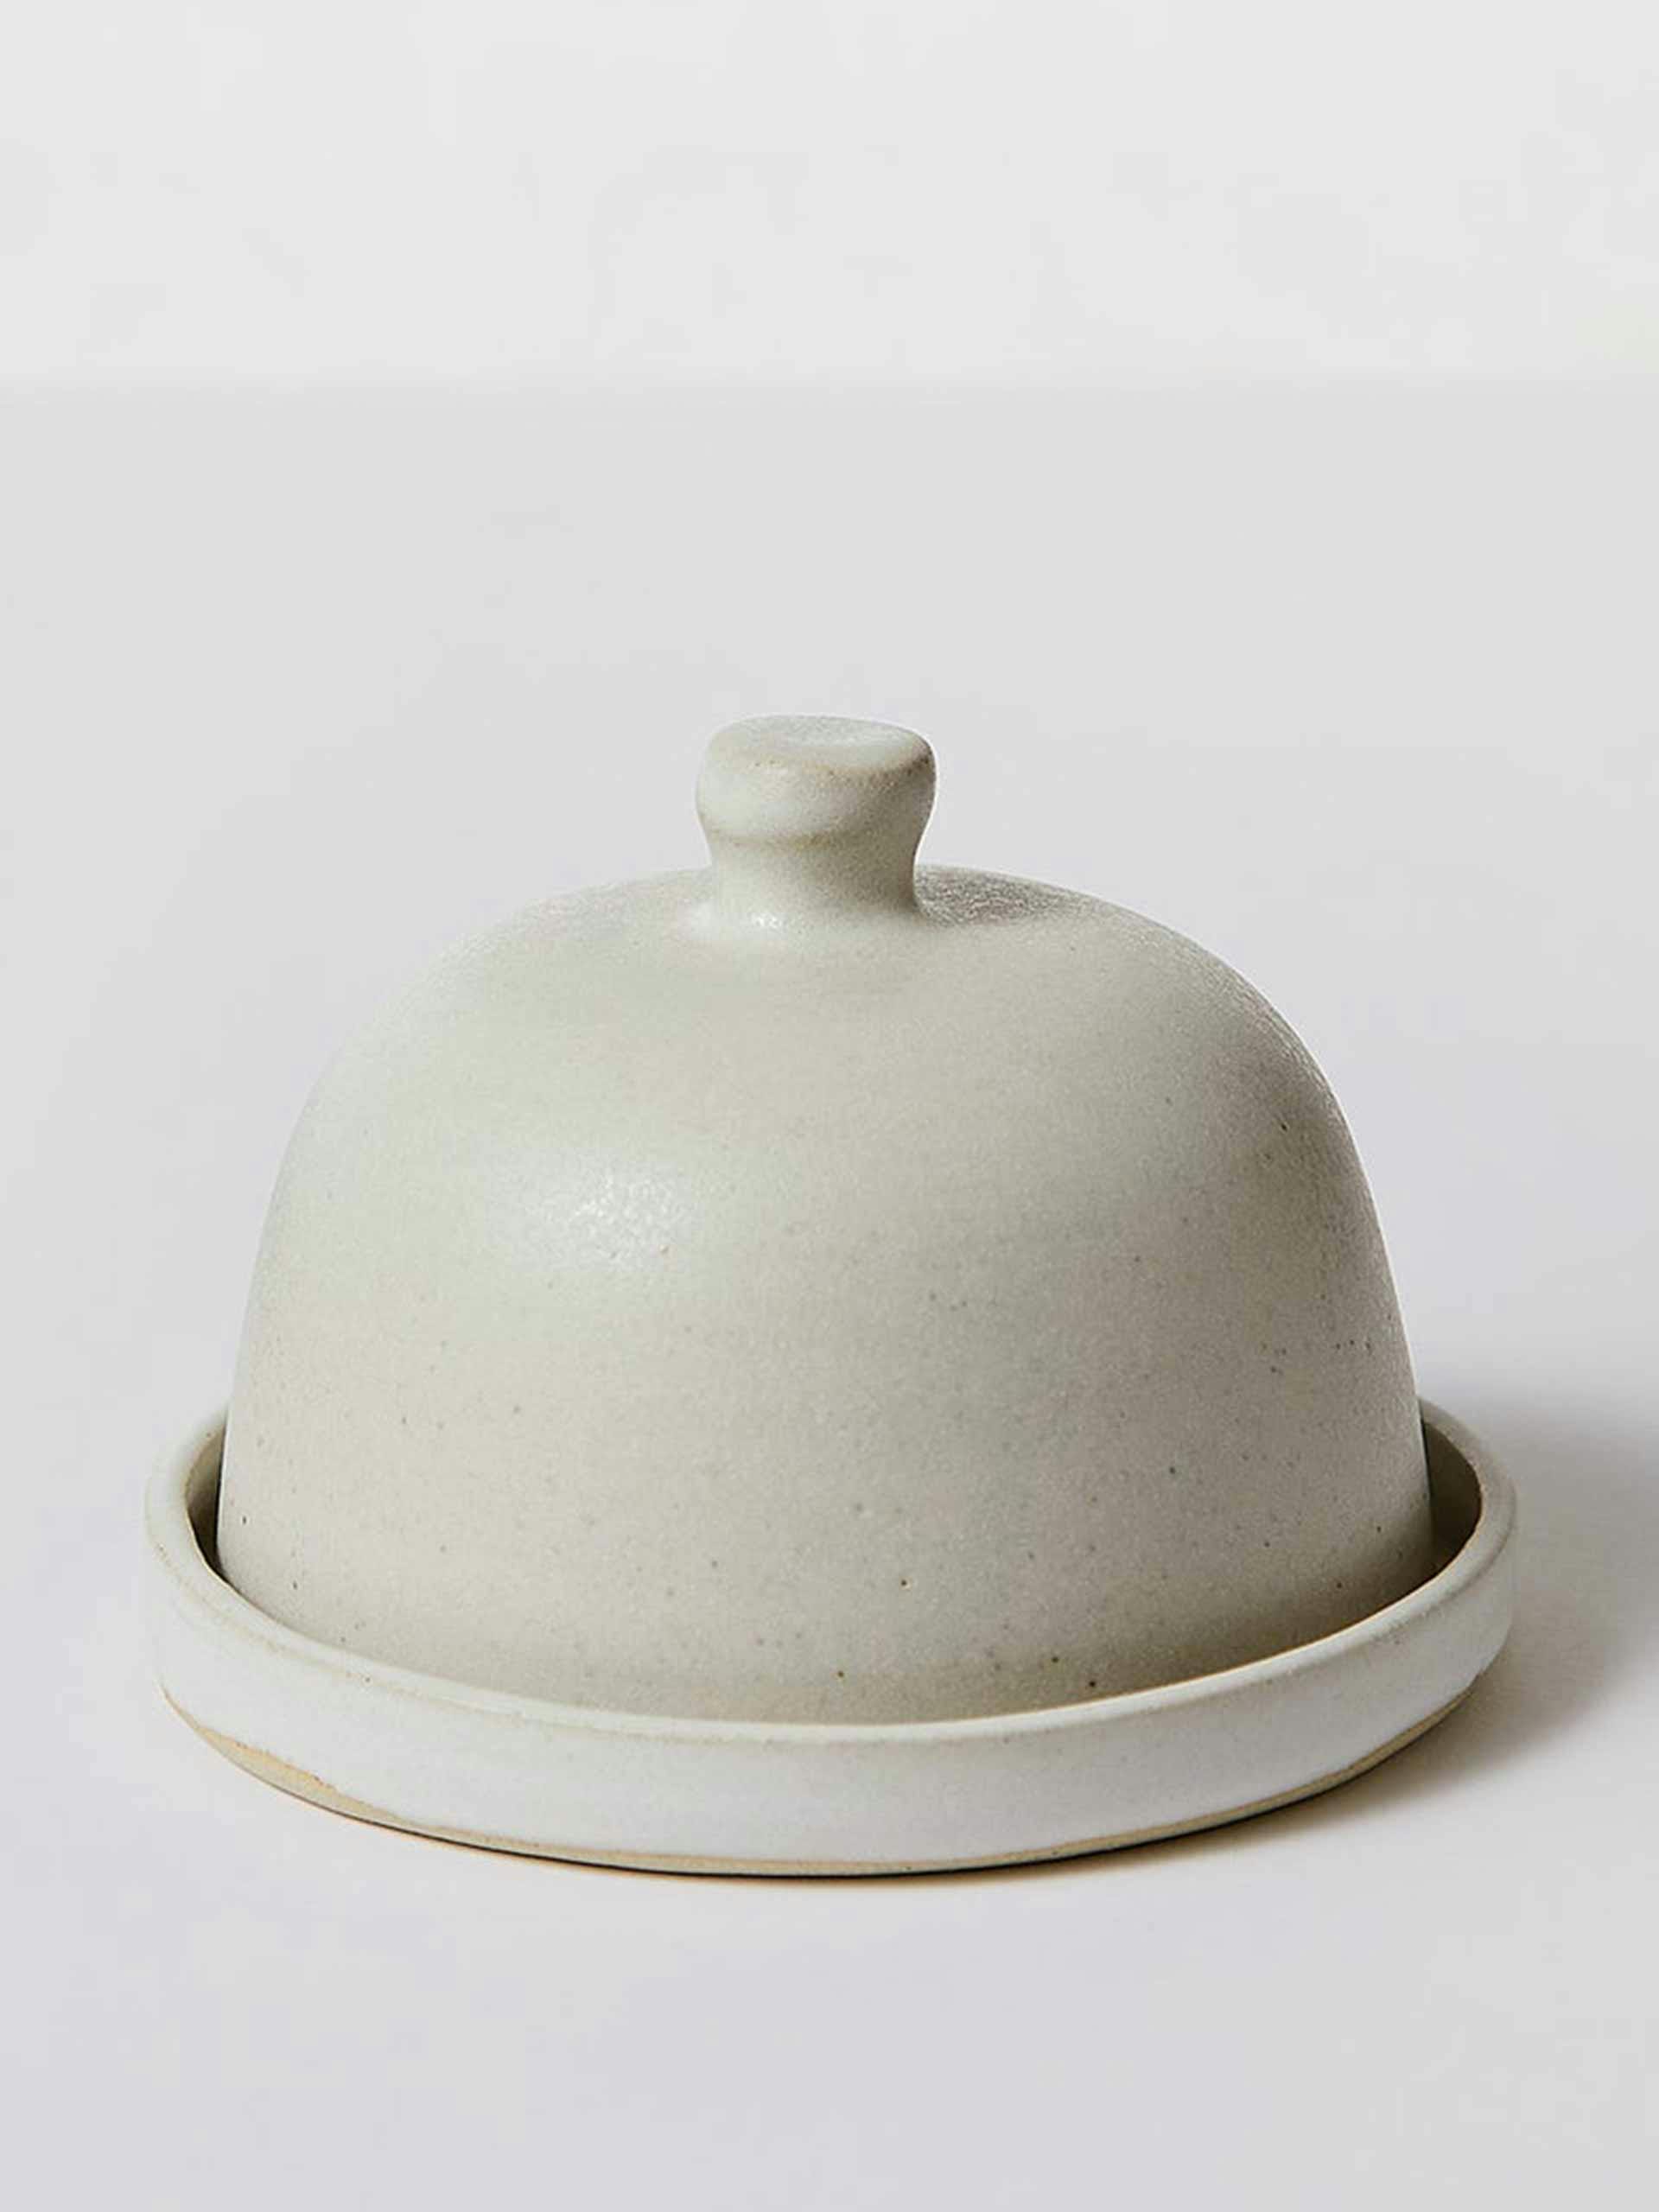 Ceramic butter dish